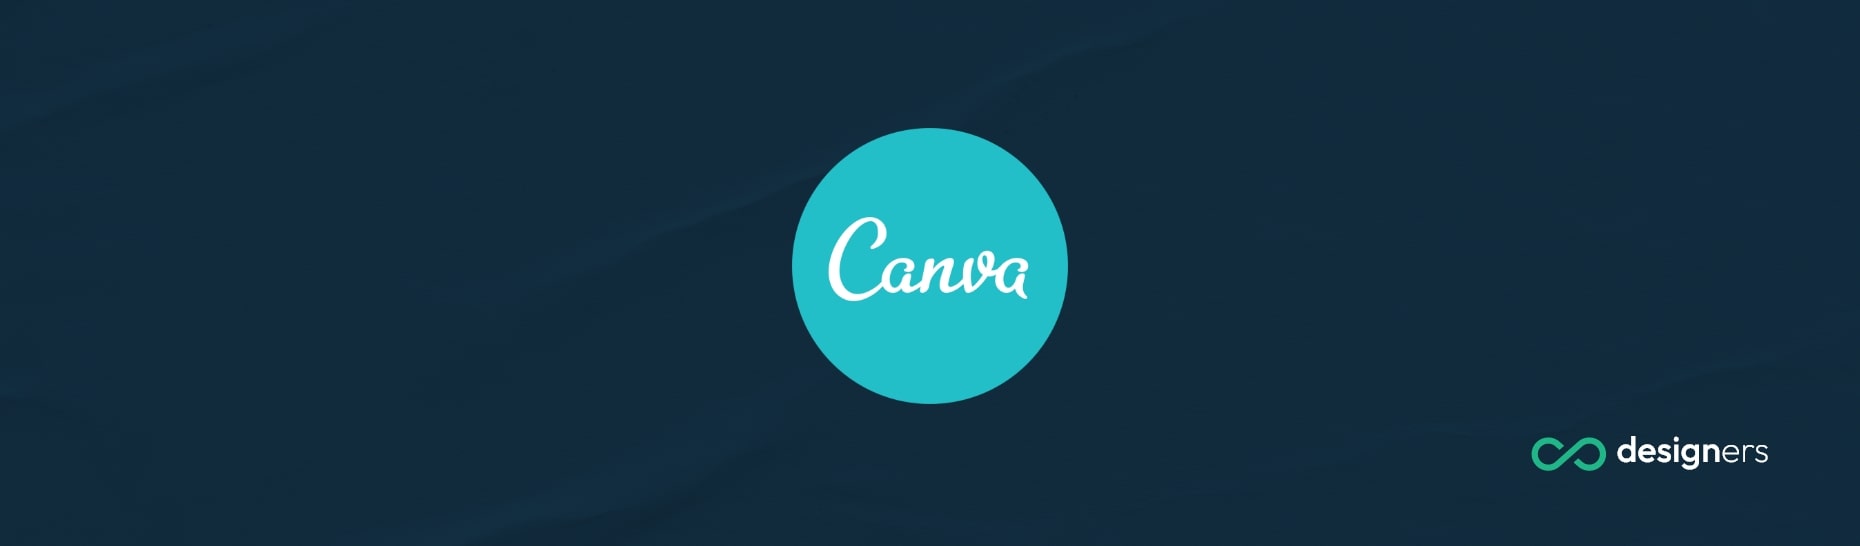 How Can a Realtor Use Canva?